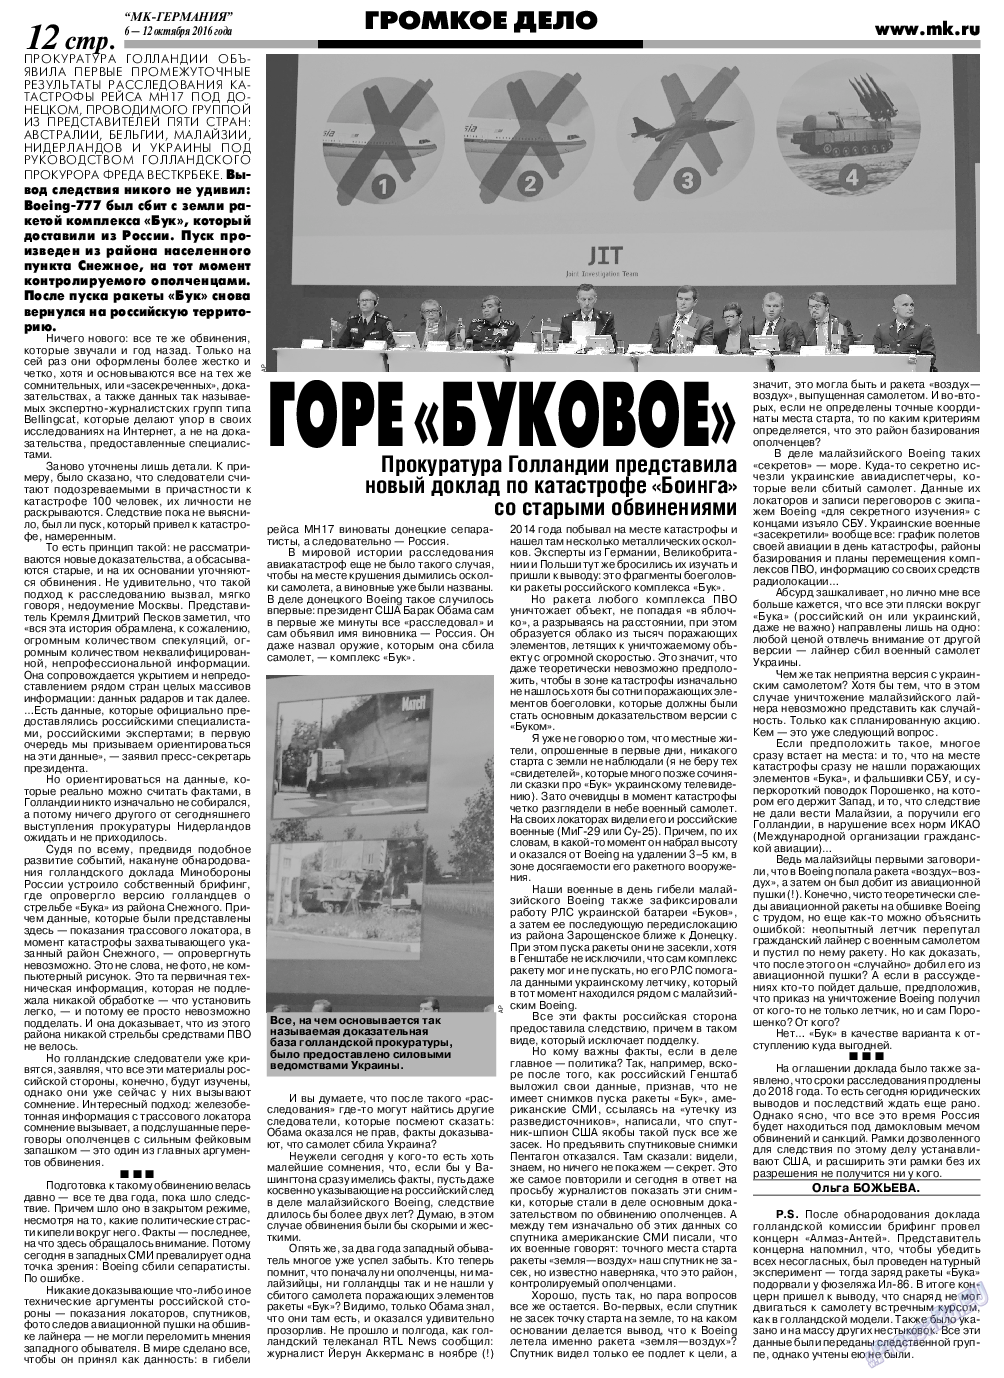 МК-Германия, газета. 2016 №41 стр.12